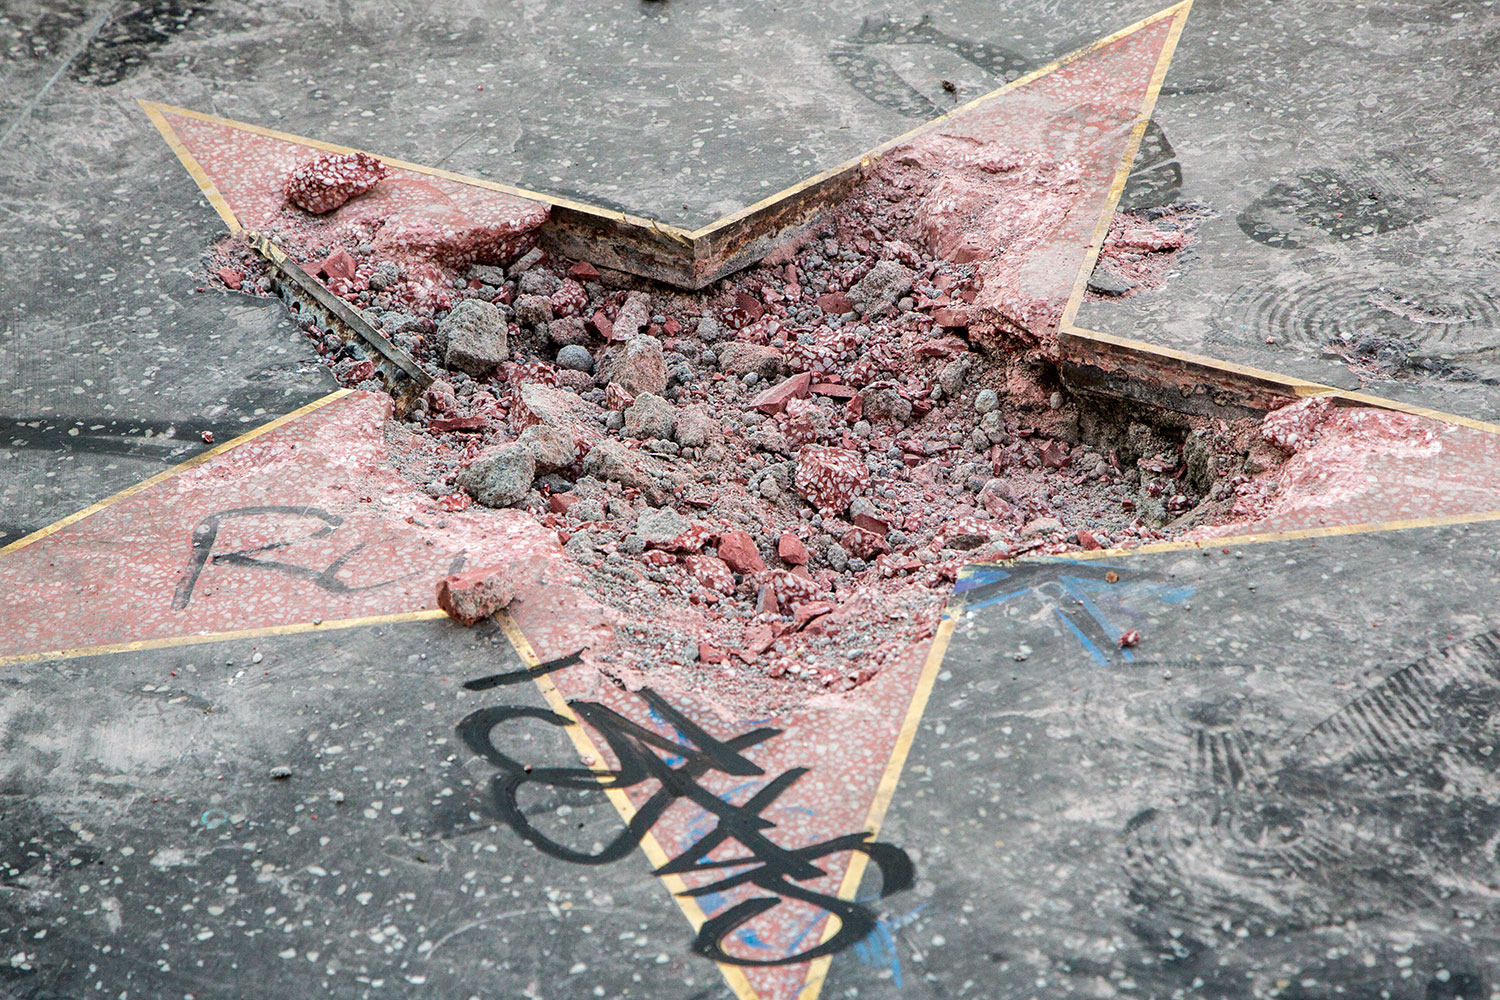 Donald Trump Walk of Fame star vandalized